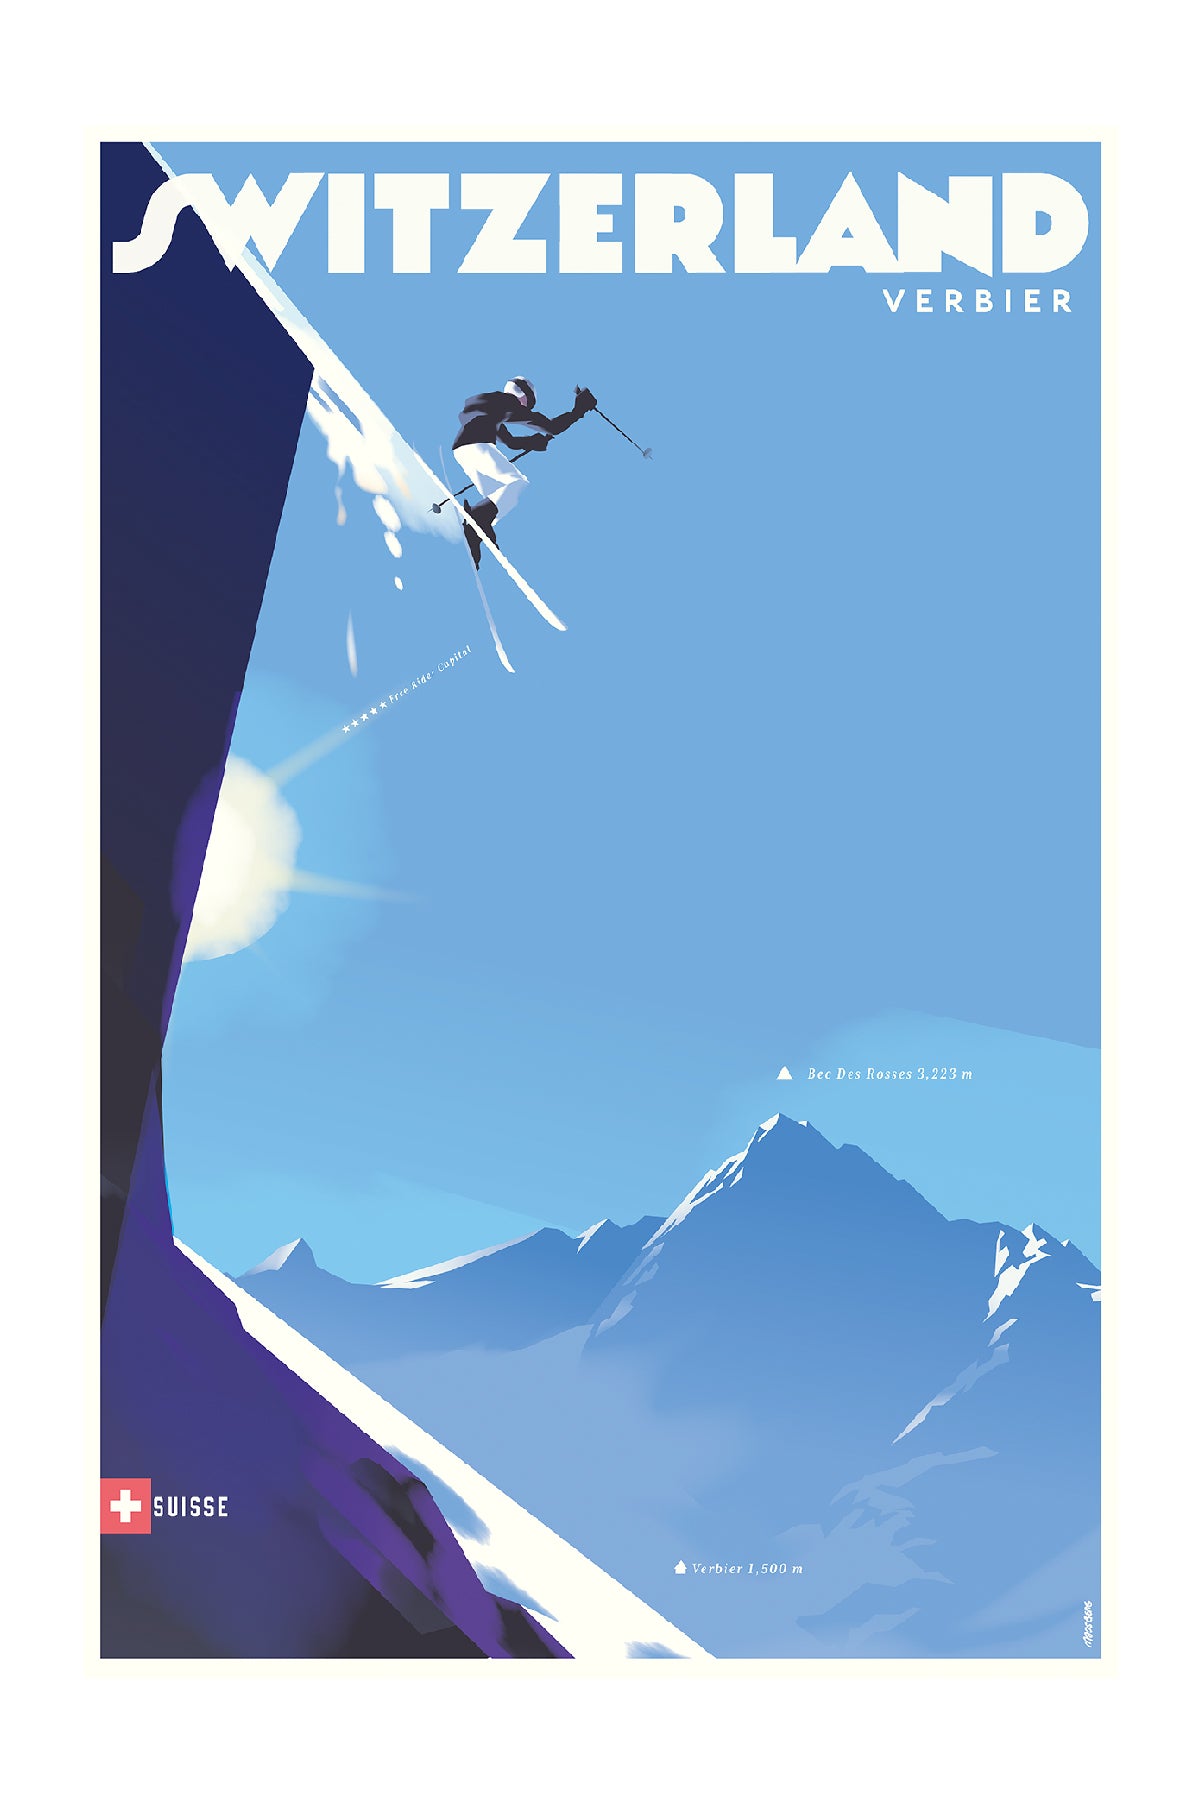 Ski Jumping, Verbier, Switzerland.